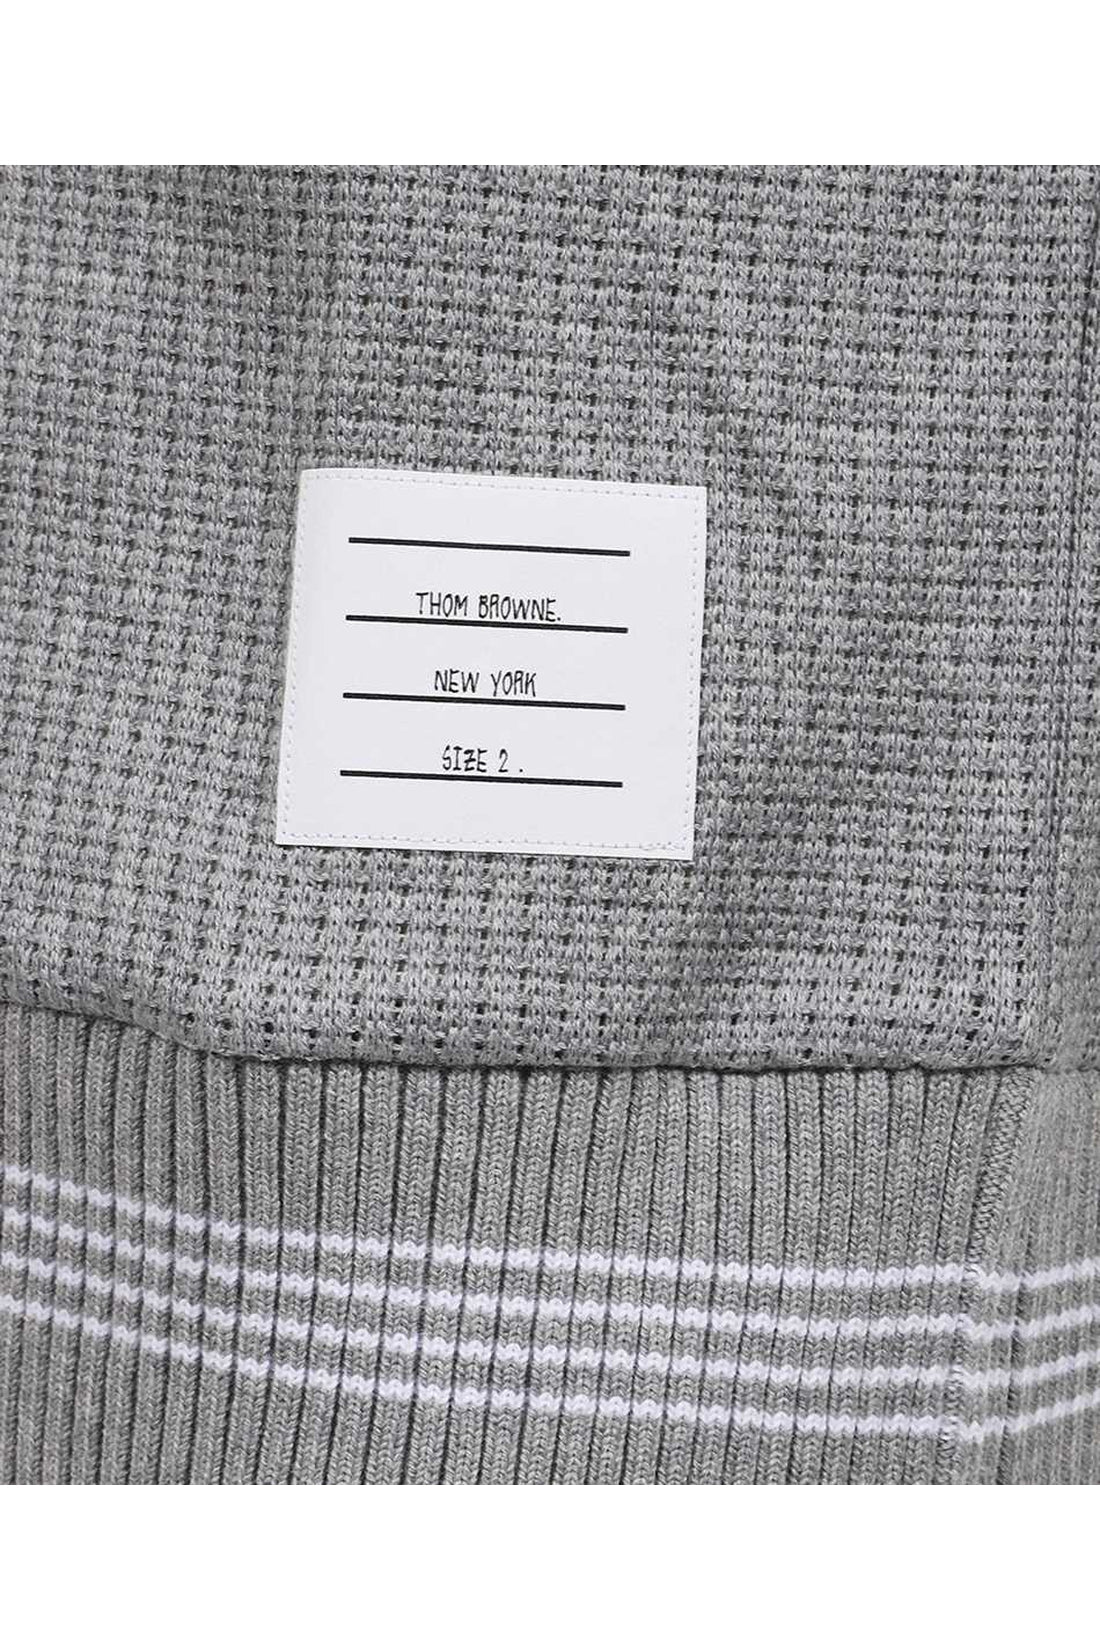 Thom Browne-OUTLET-SALE-Short sleeve cotton polo shirt-ARCHIVIST